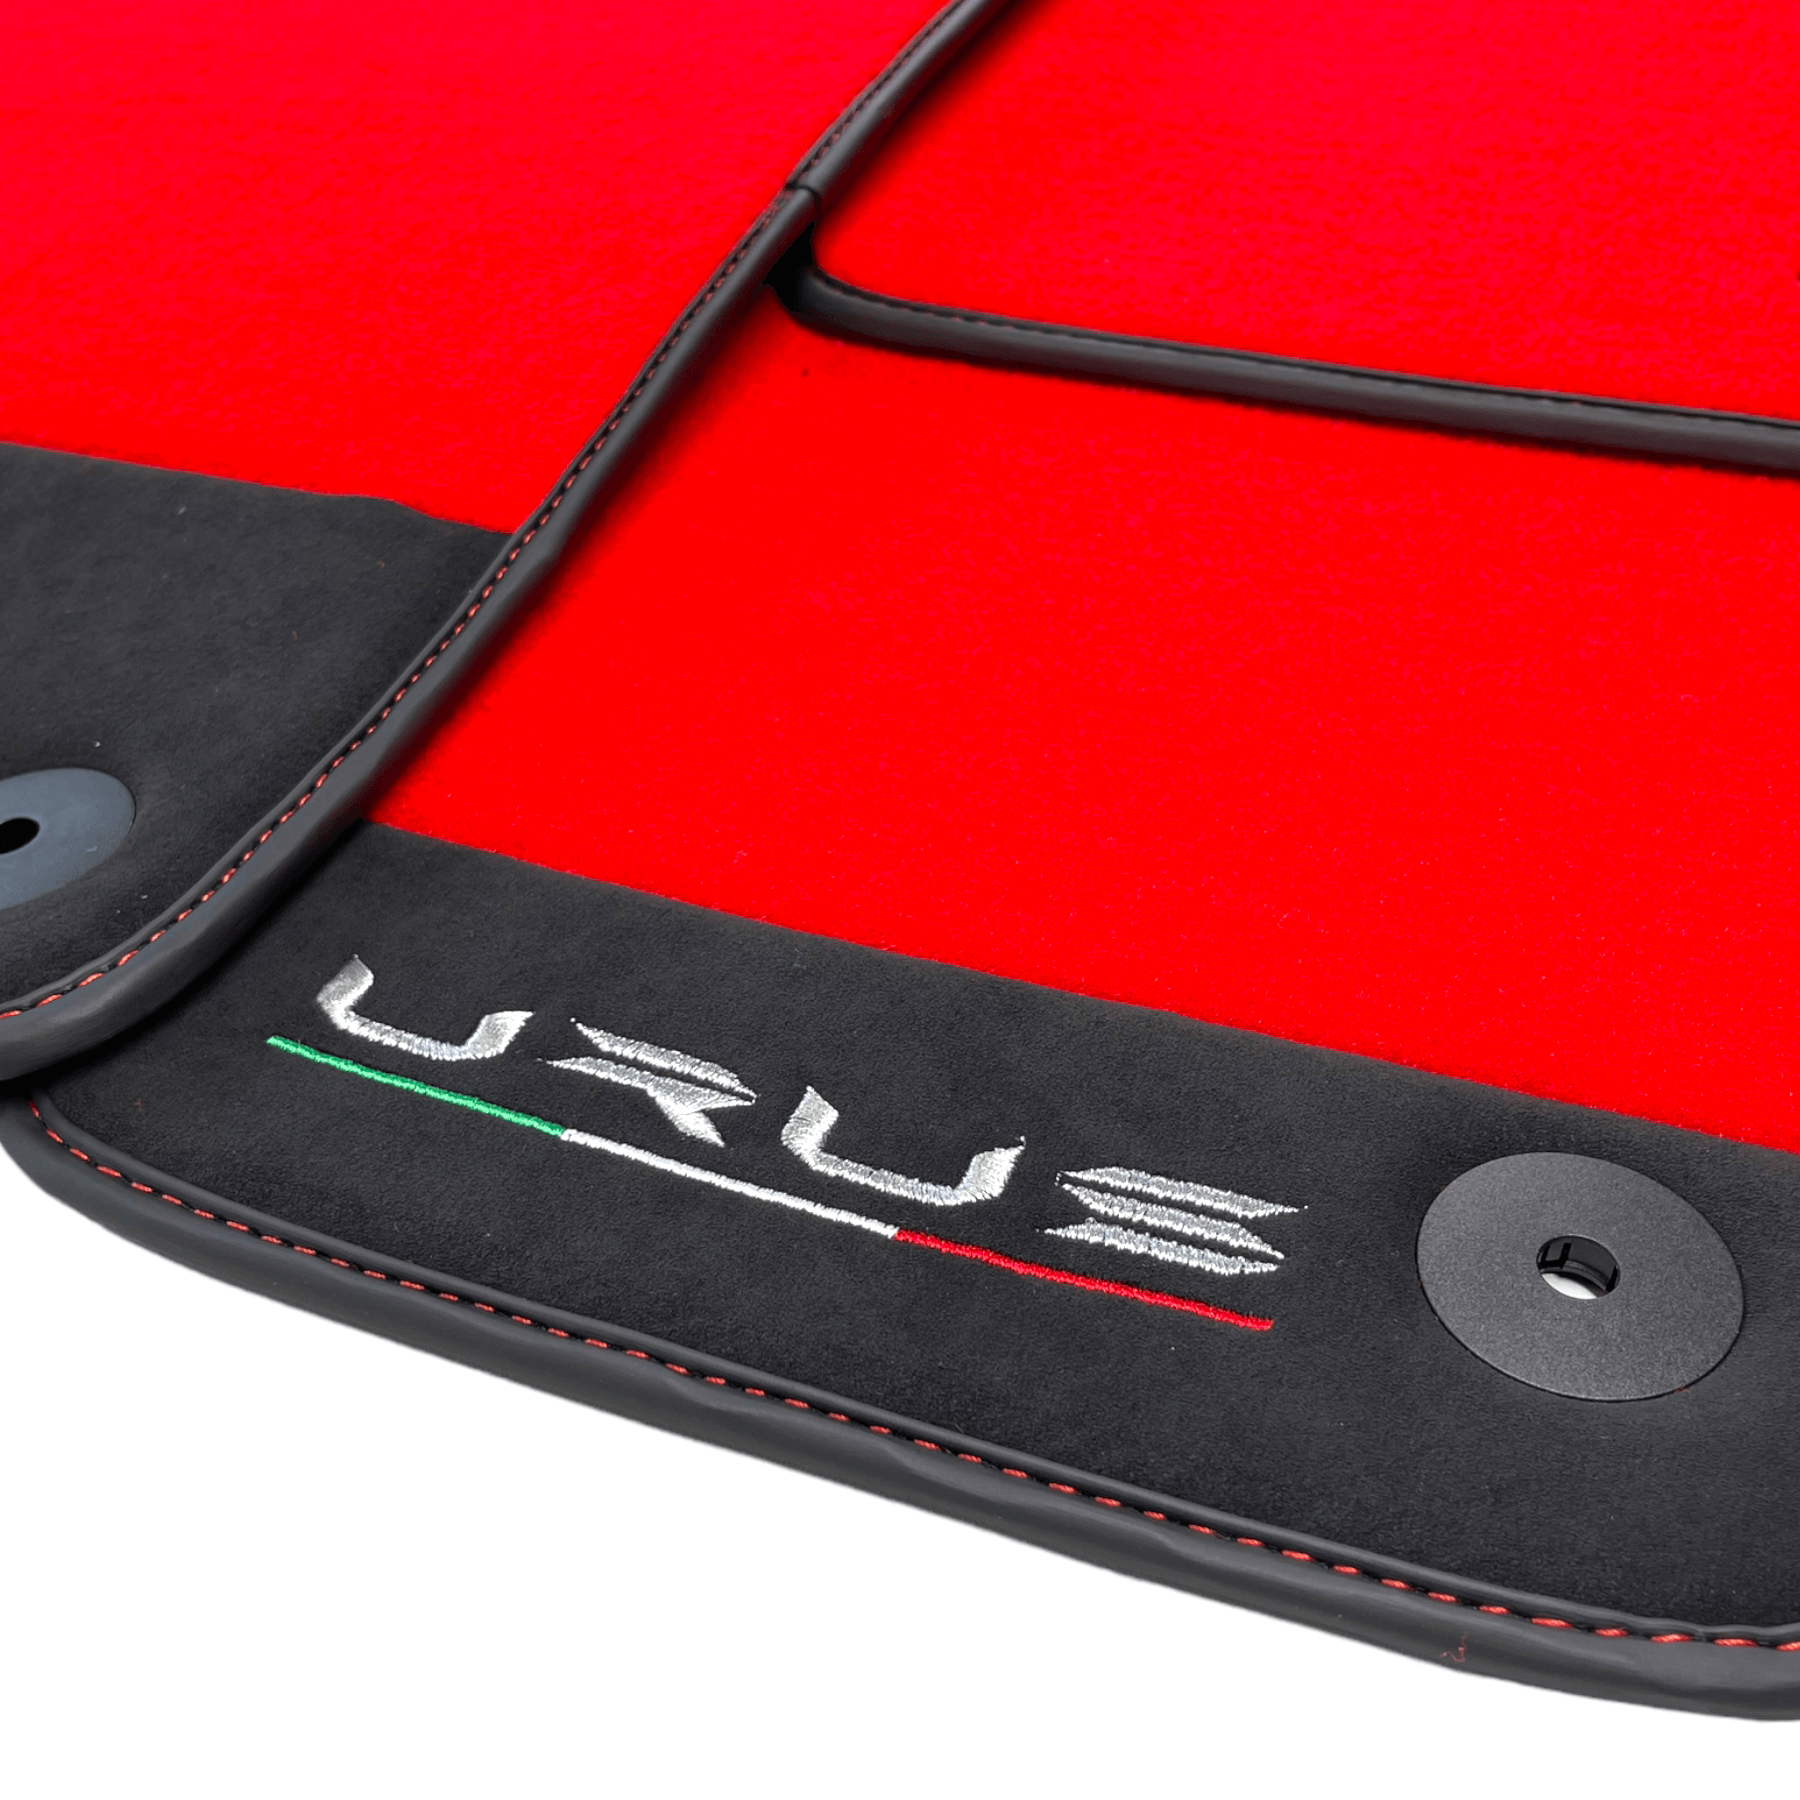 Red Floor Mats For Lamborghini Urus With Alcantara Leather - AutoWin